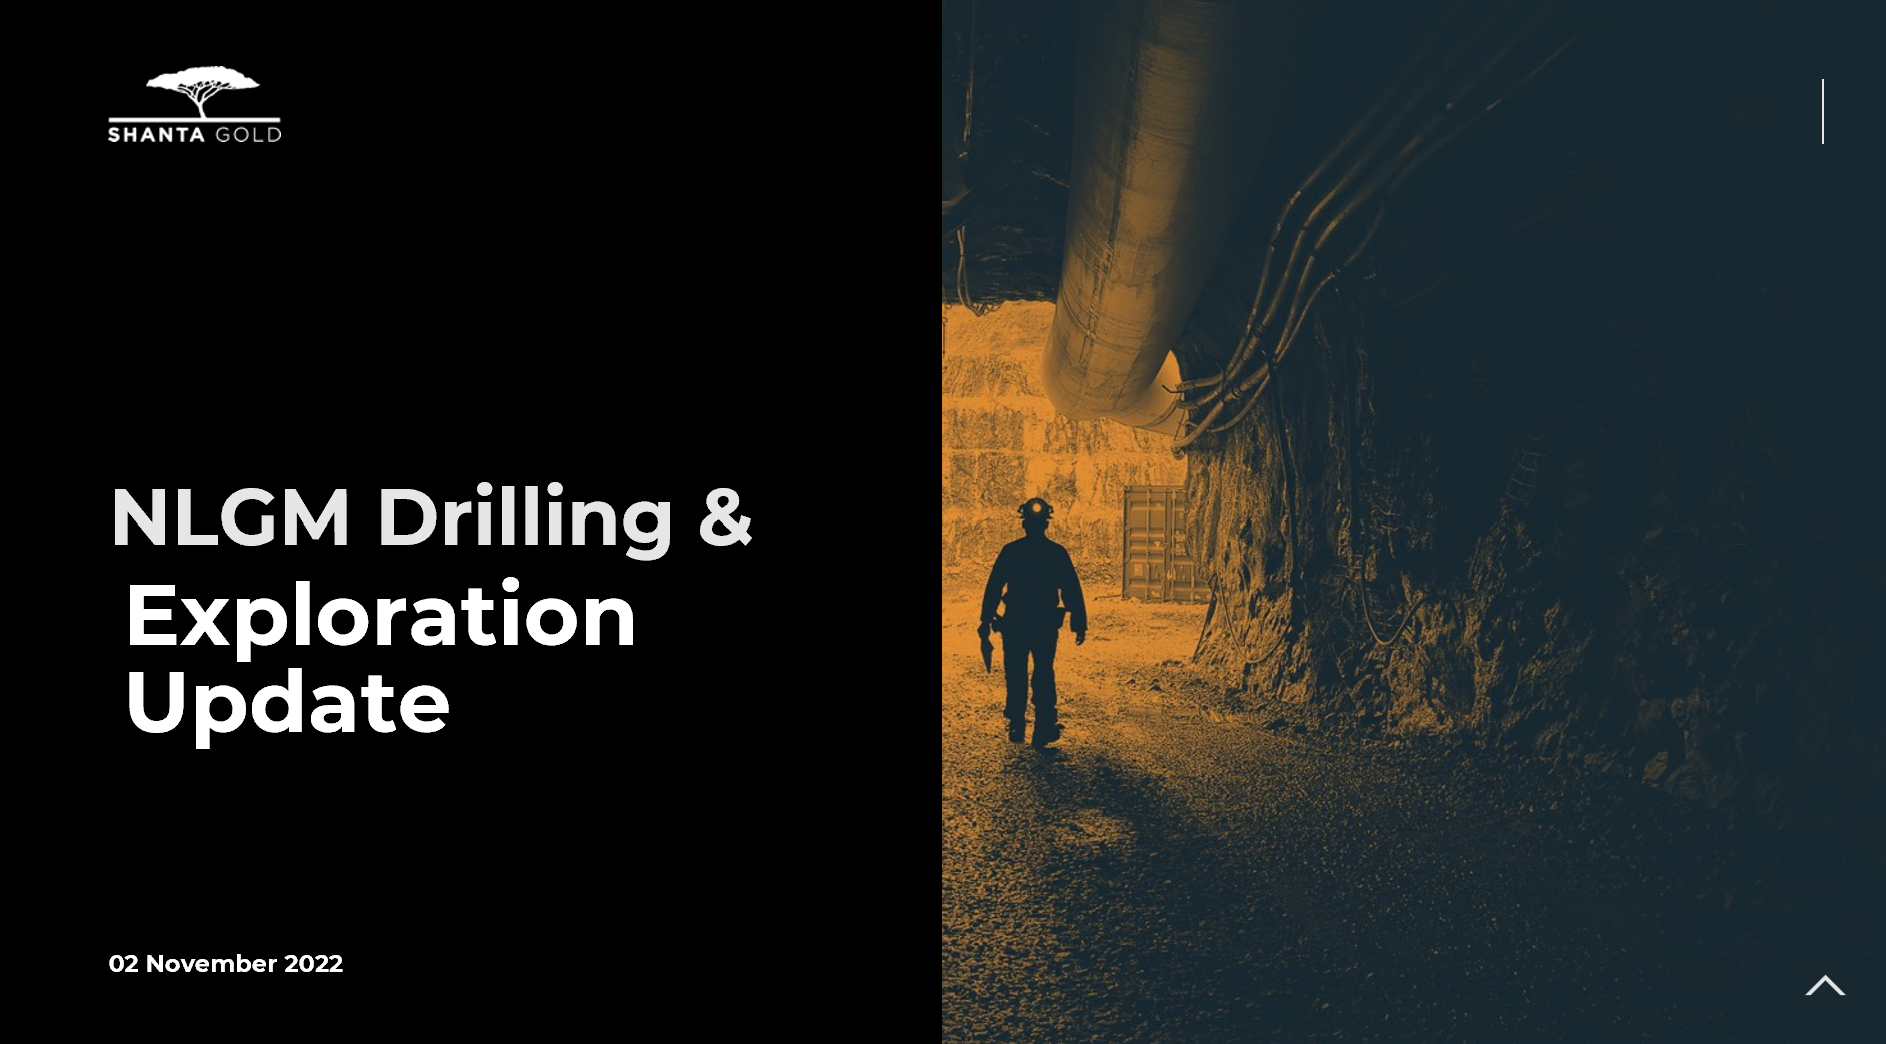 New Luika Gold Mine Exploration Drilling Update Presentation